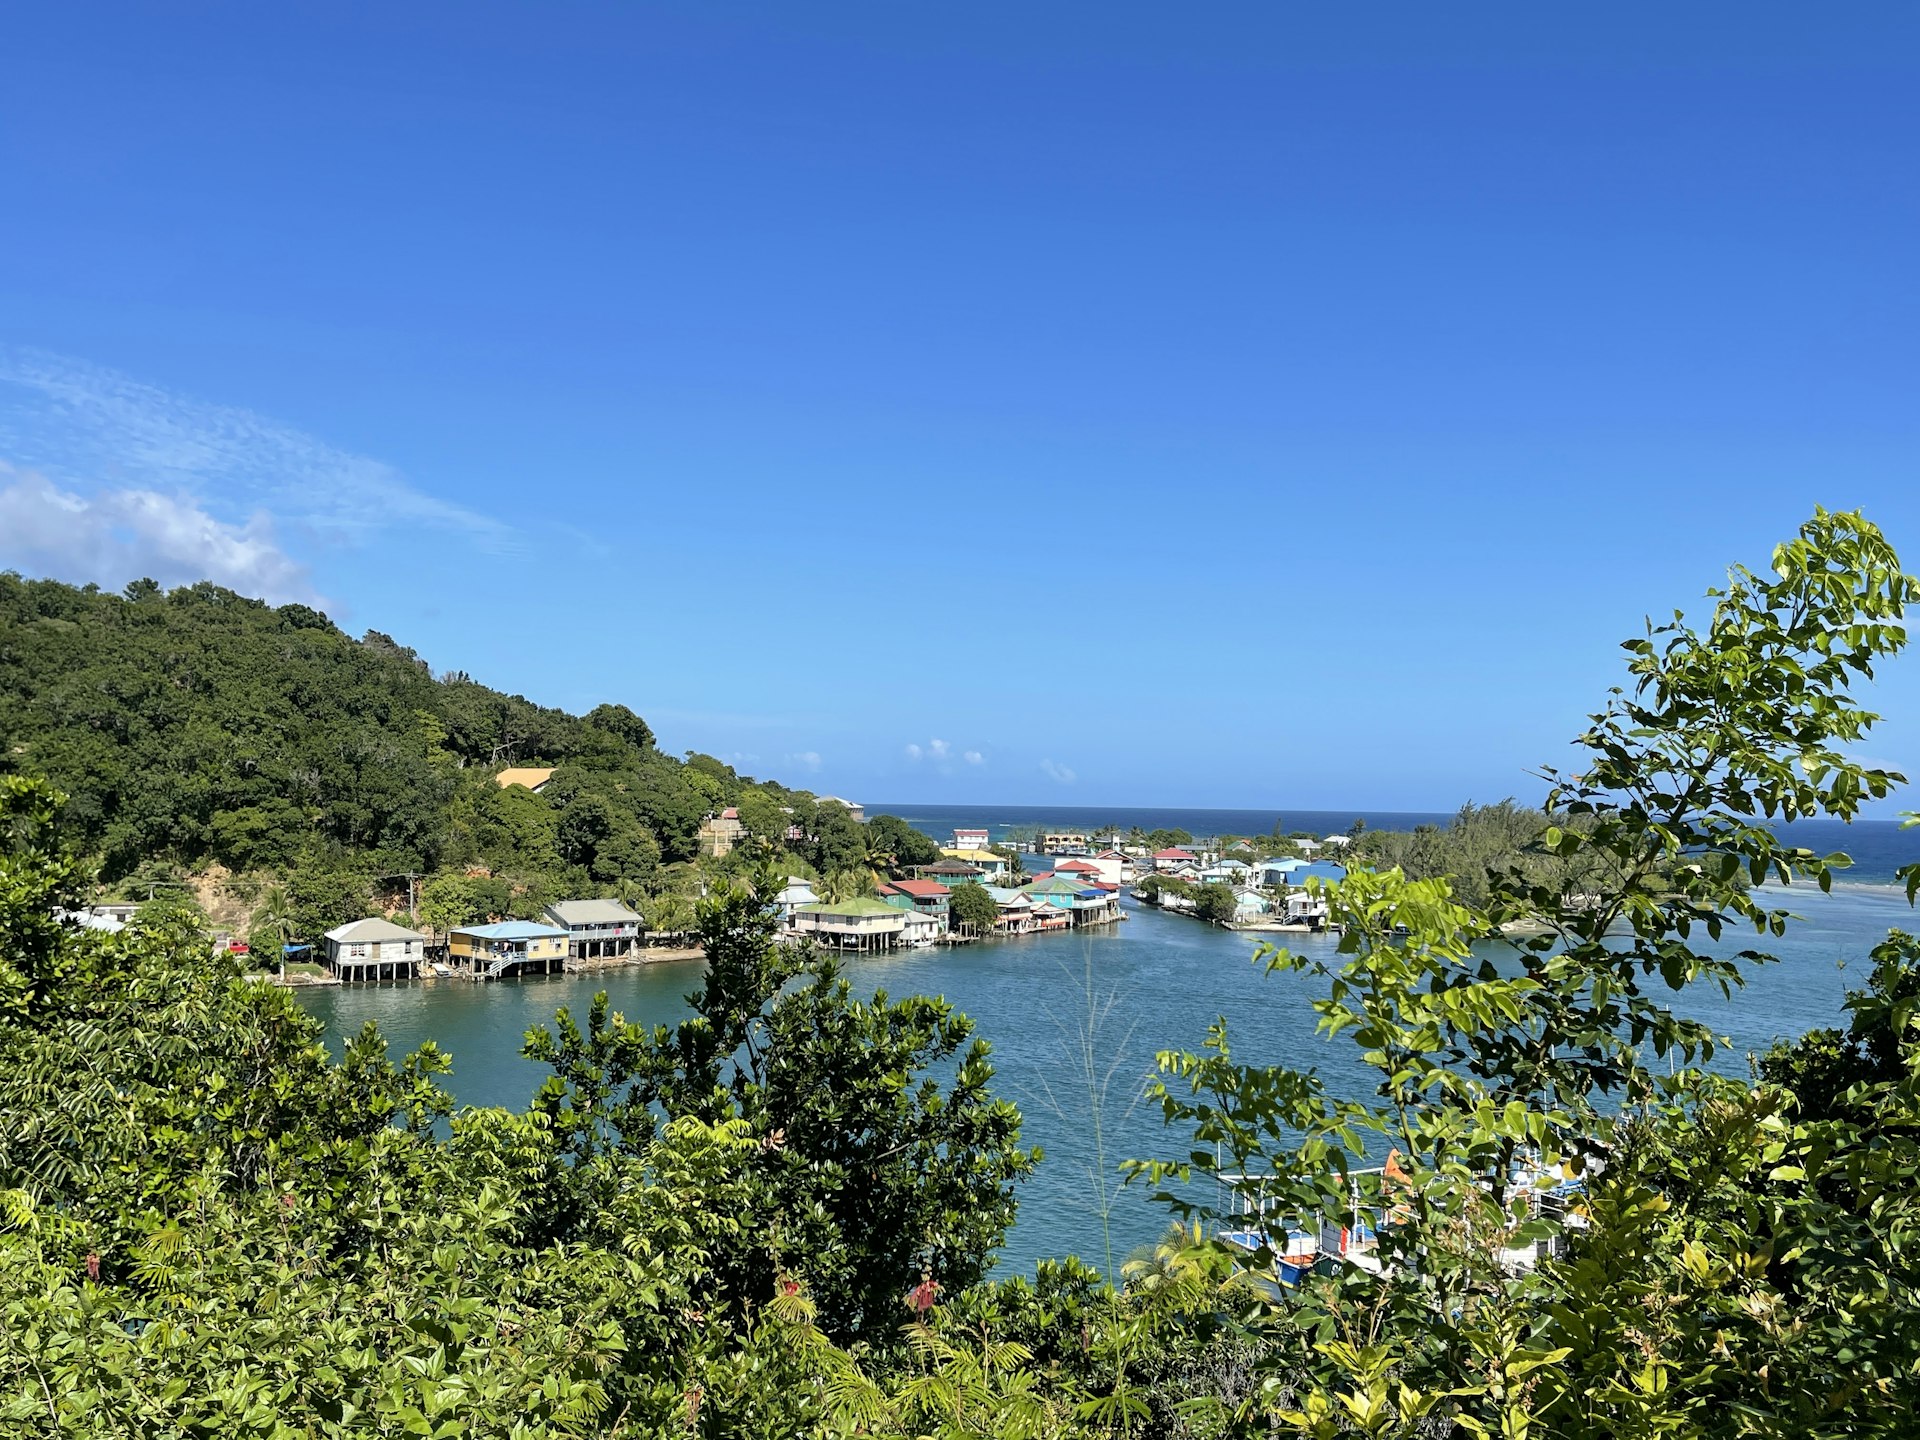 The picturesque Oakridge bay in Honduras